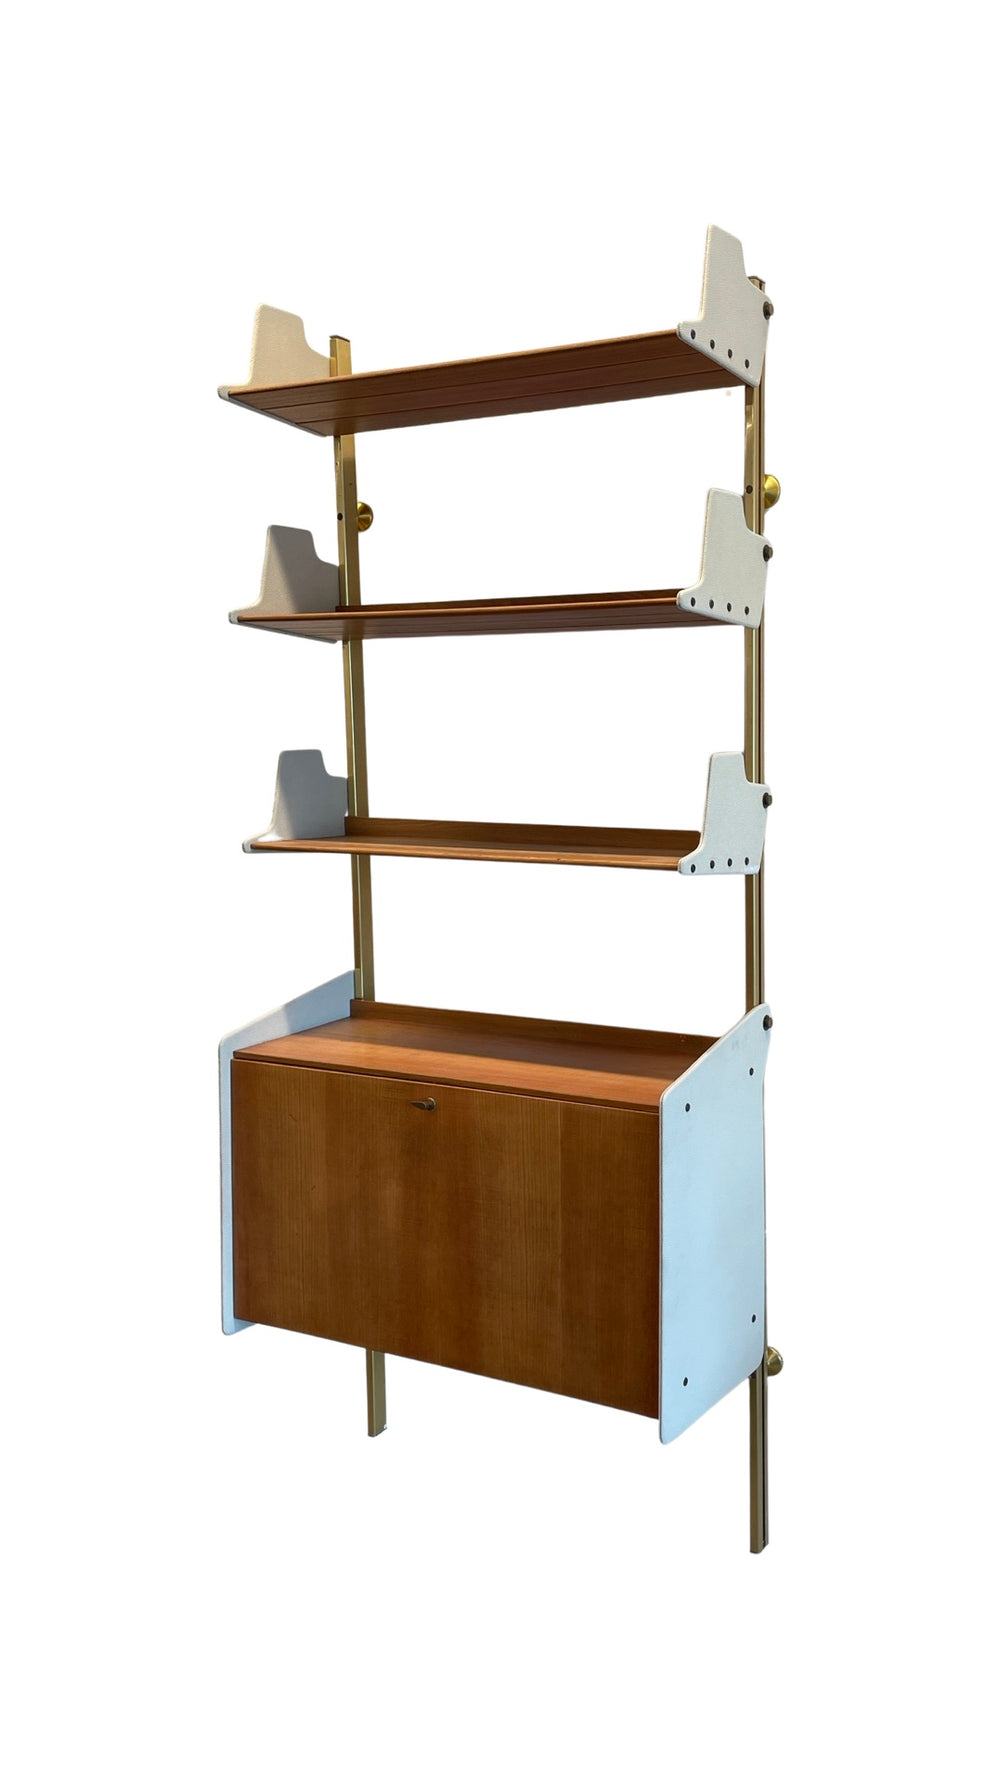 Osvaldo Borsani L60 shelving system with integrated secretary or bar cabinet